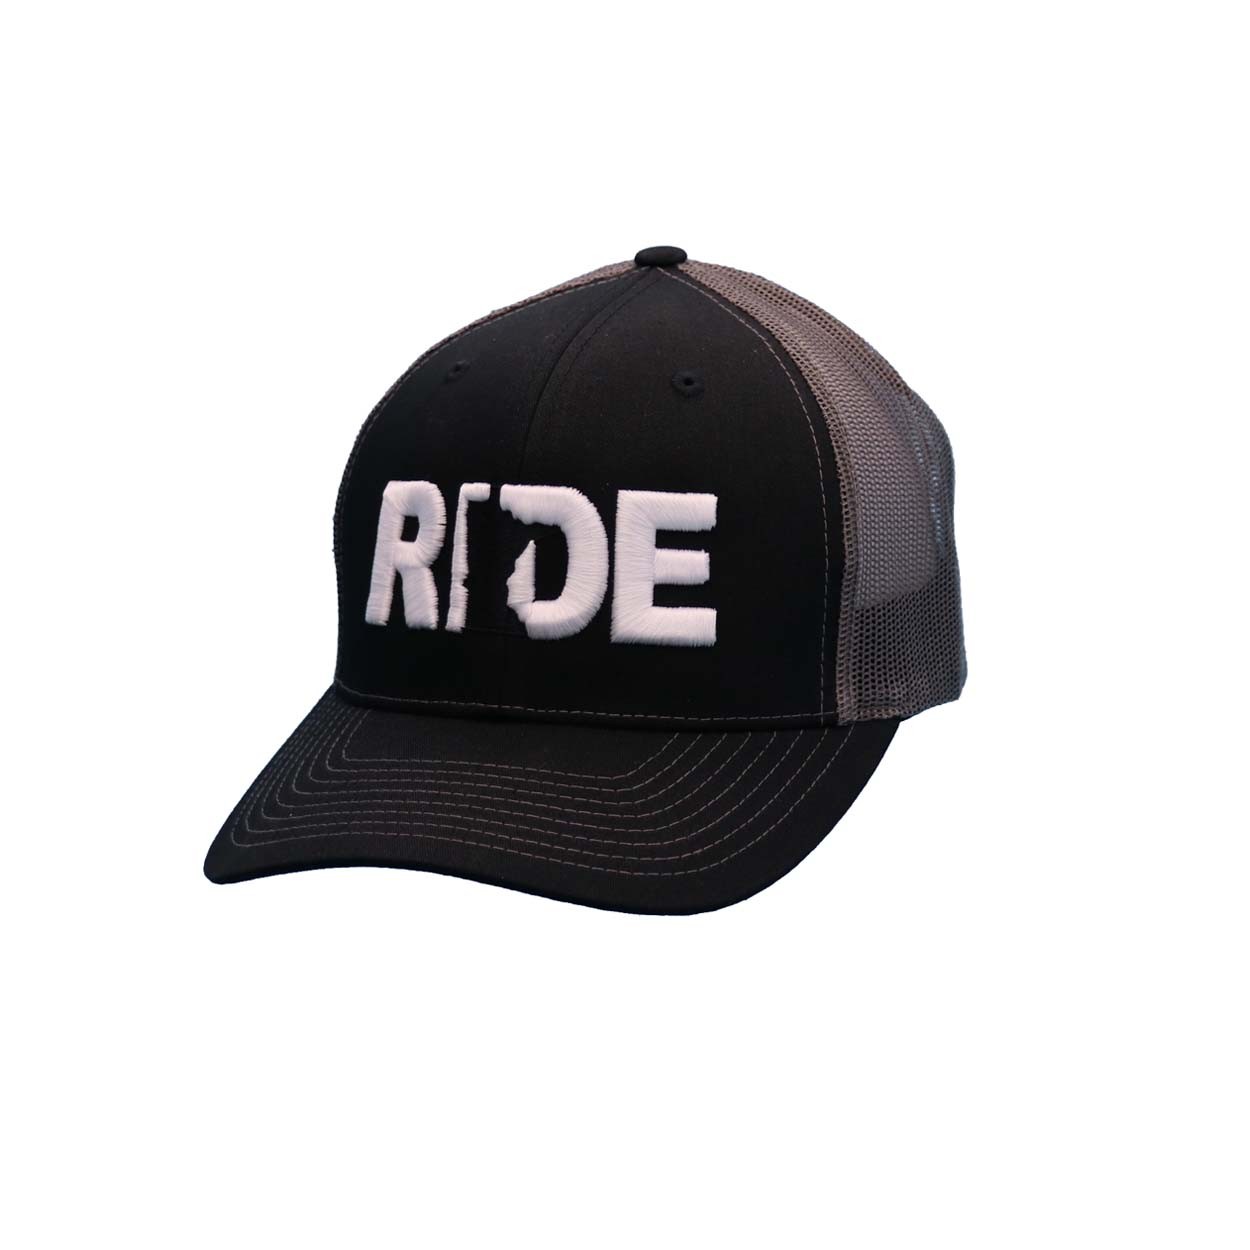 Ride Minnesota Classic Embroidered Snapback Trucker Hat Black/Charcoal